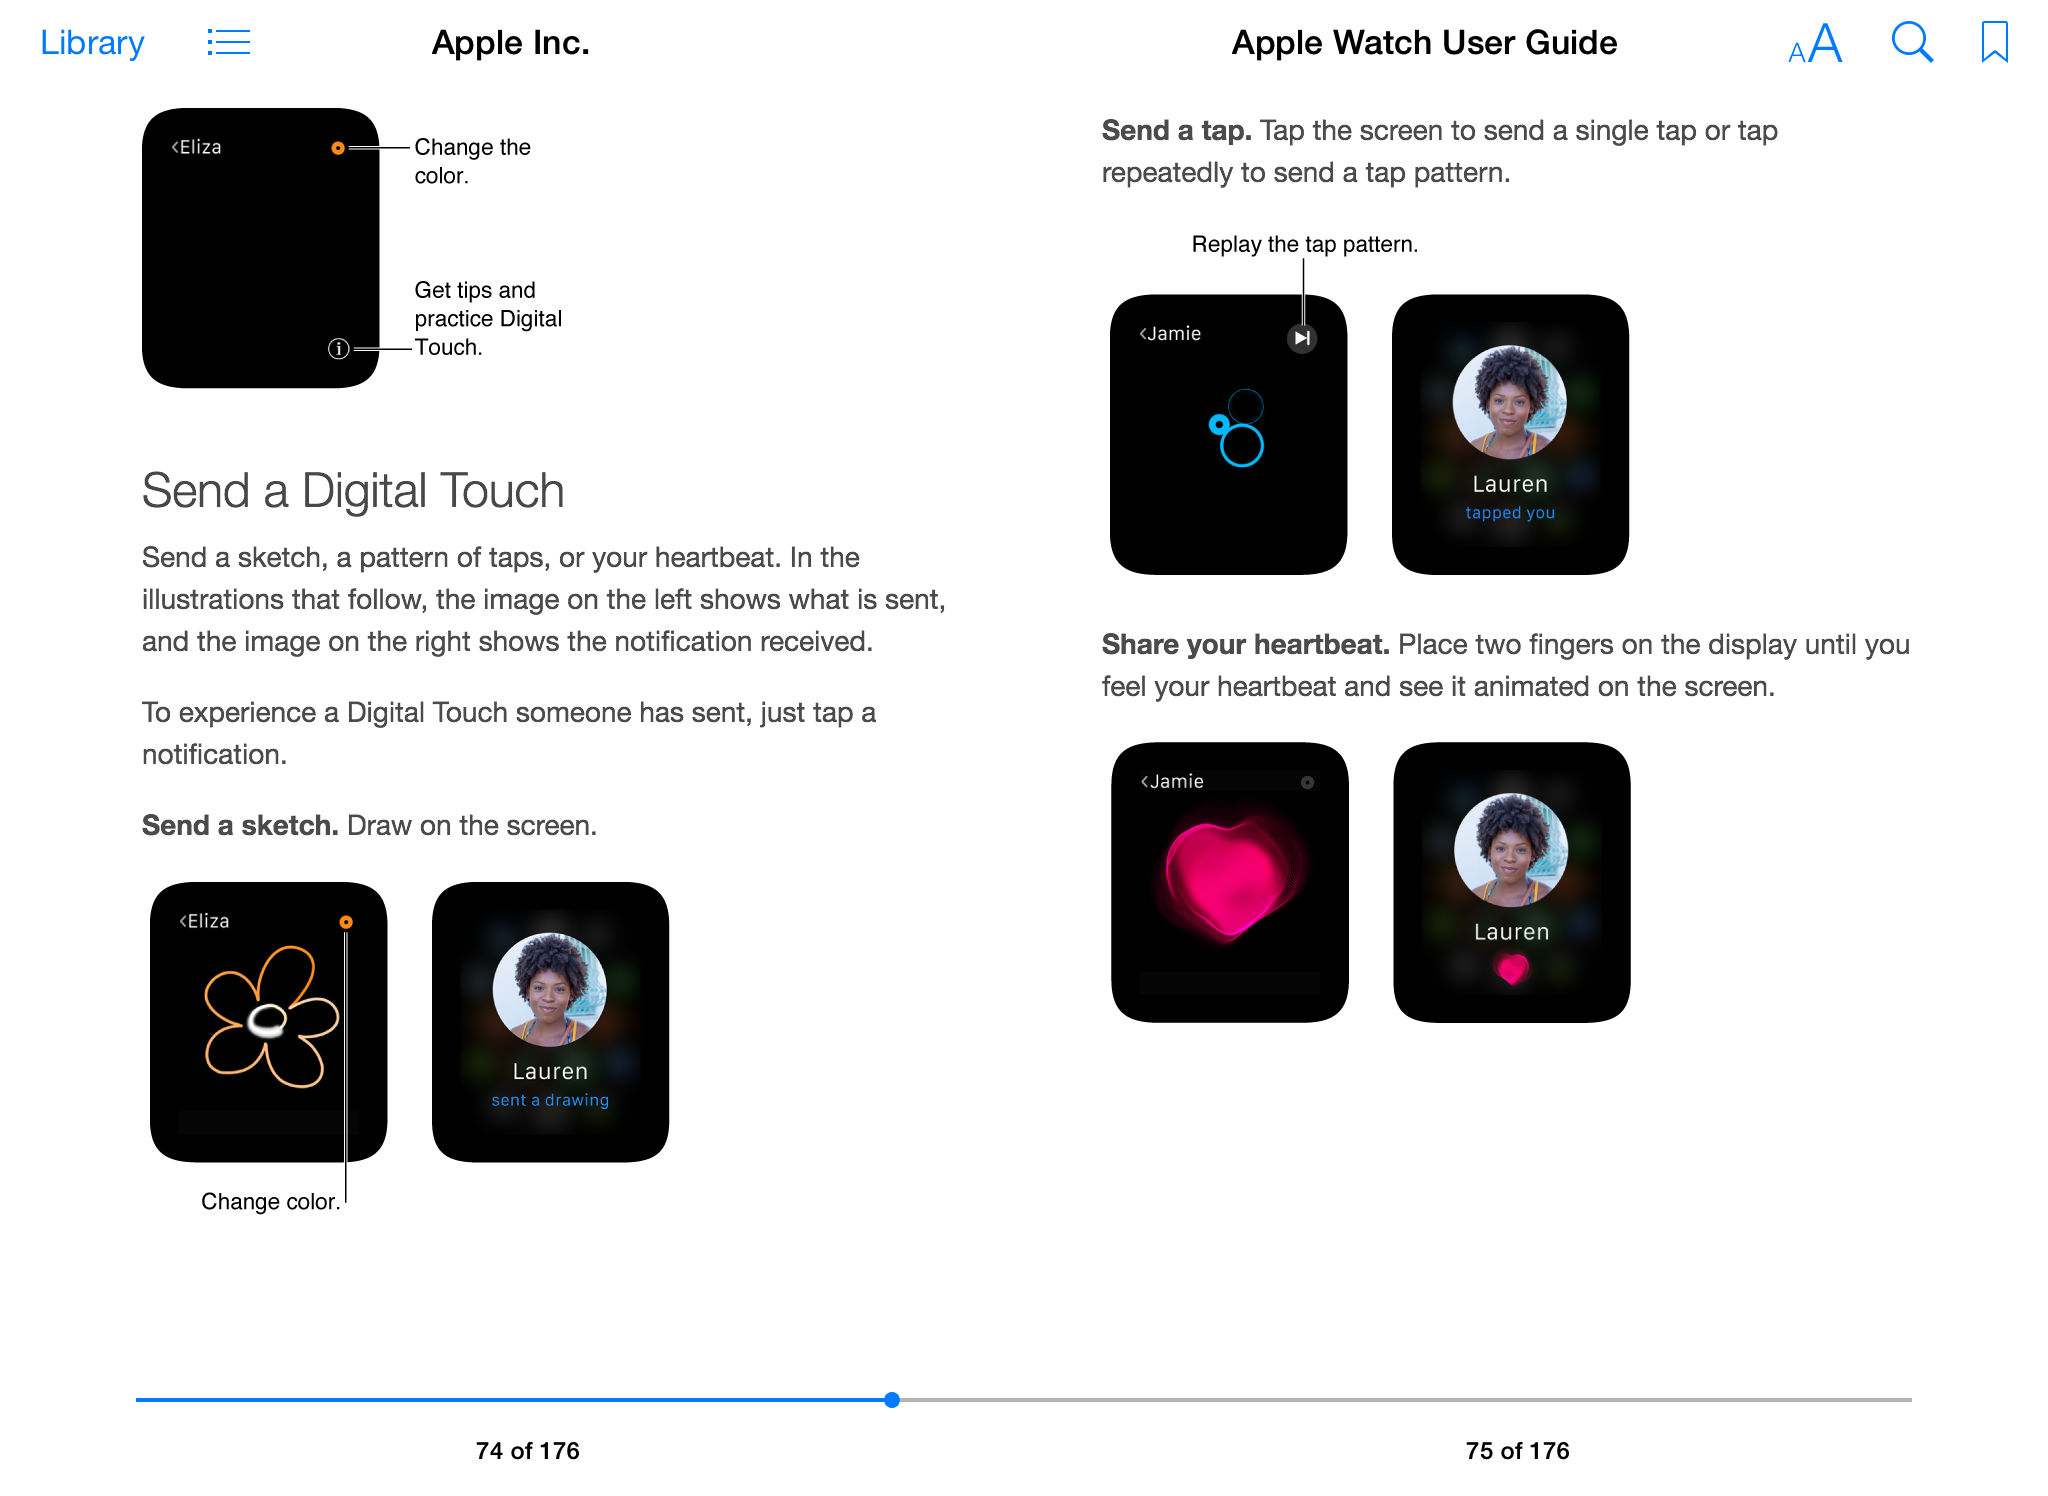 Apple Watch User Guide iBook screenshot 004